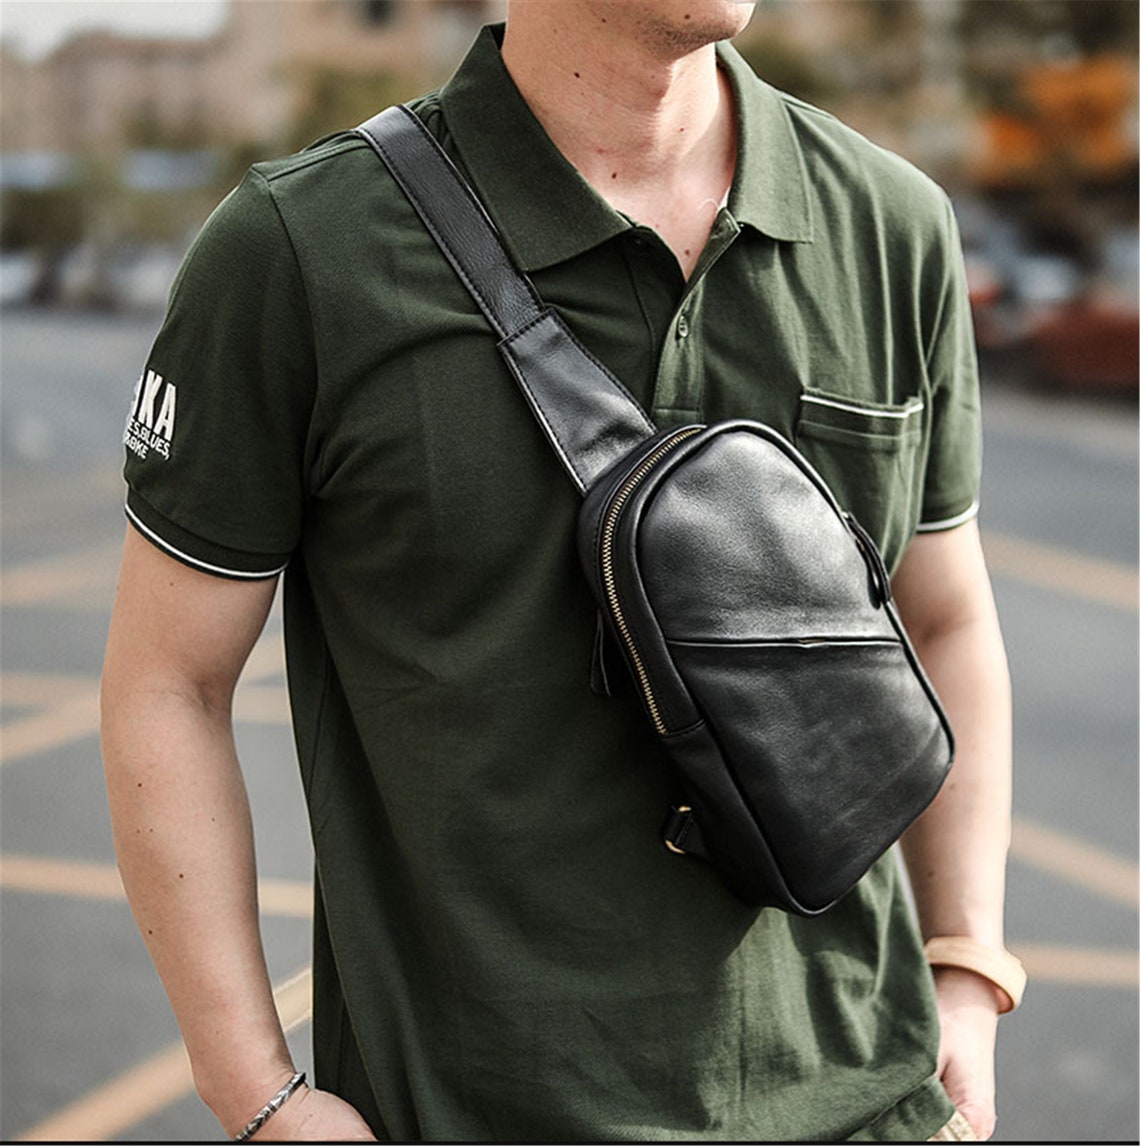 Men's light small chest bag mini leather bag small bag | Etsy